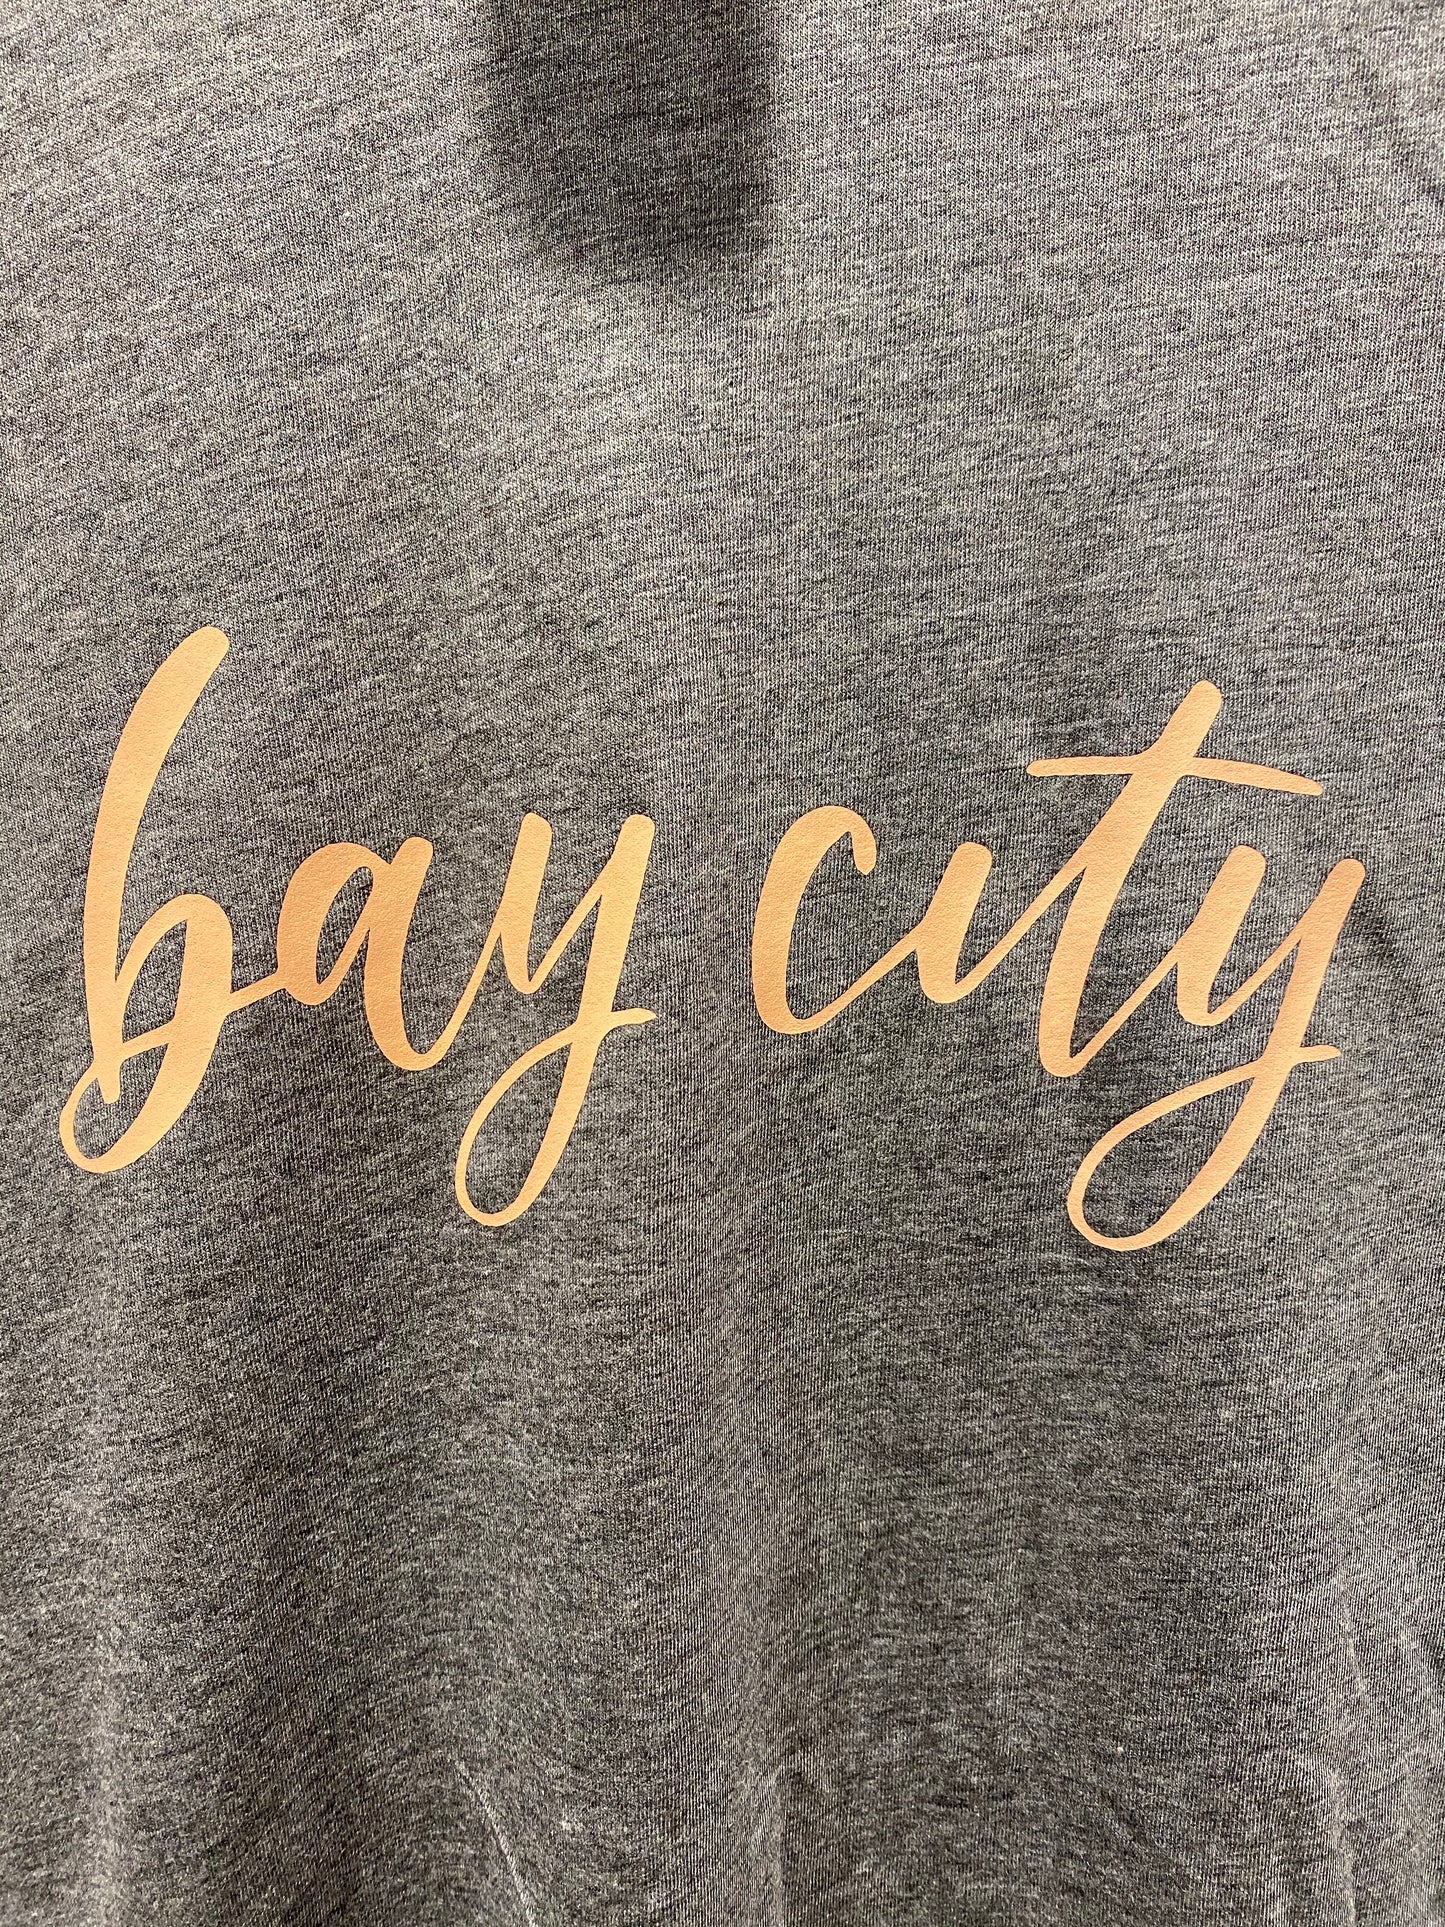 Bay City Script Tee